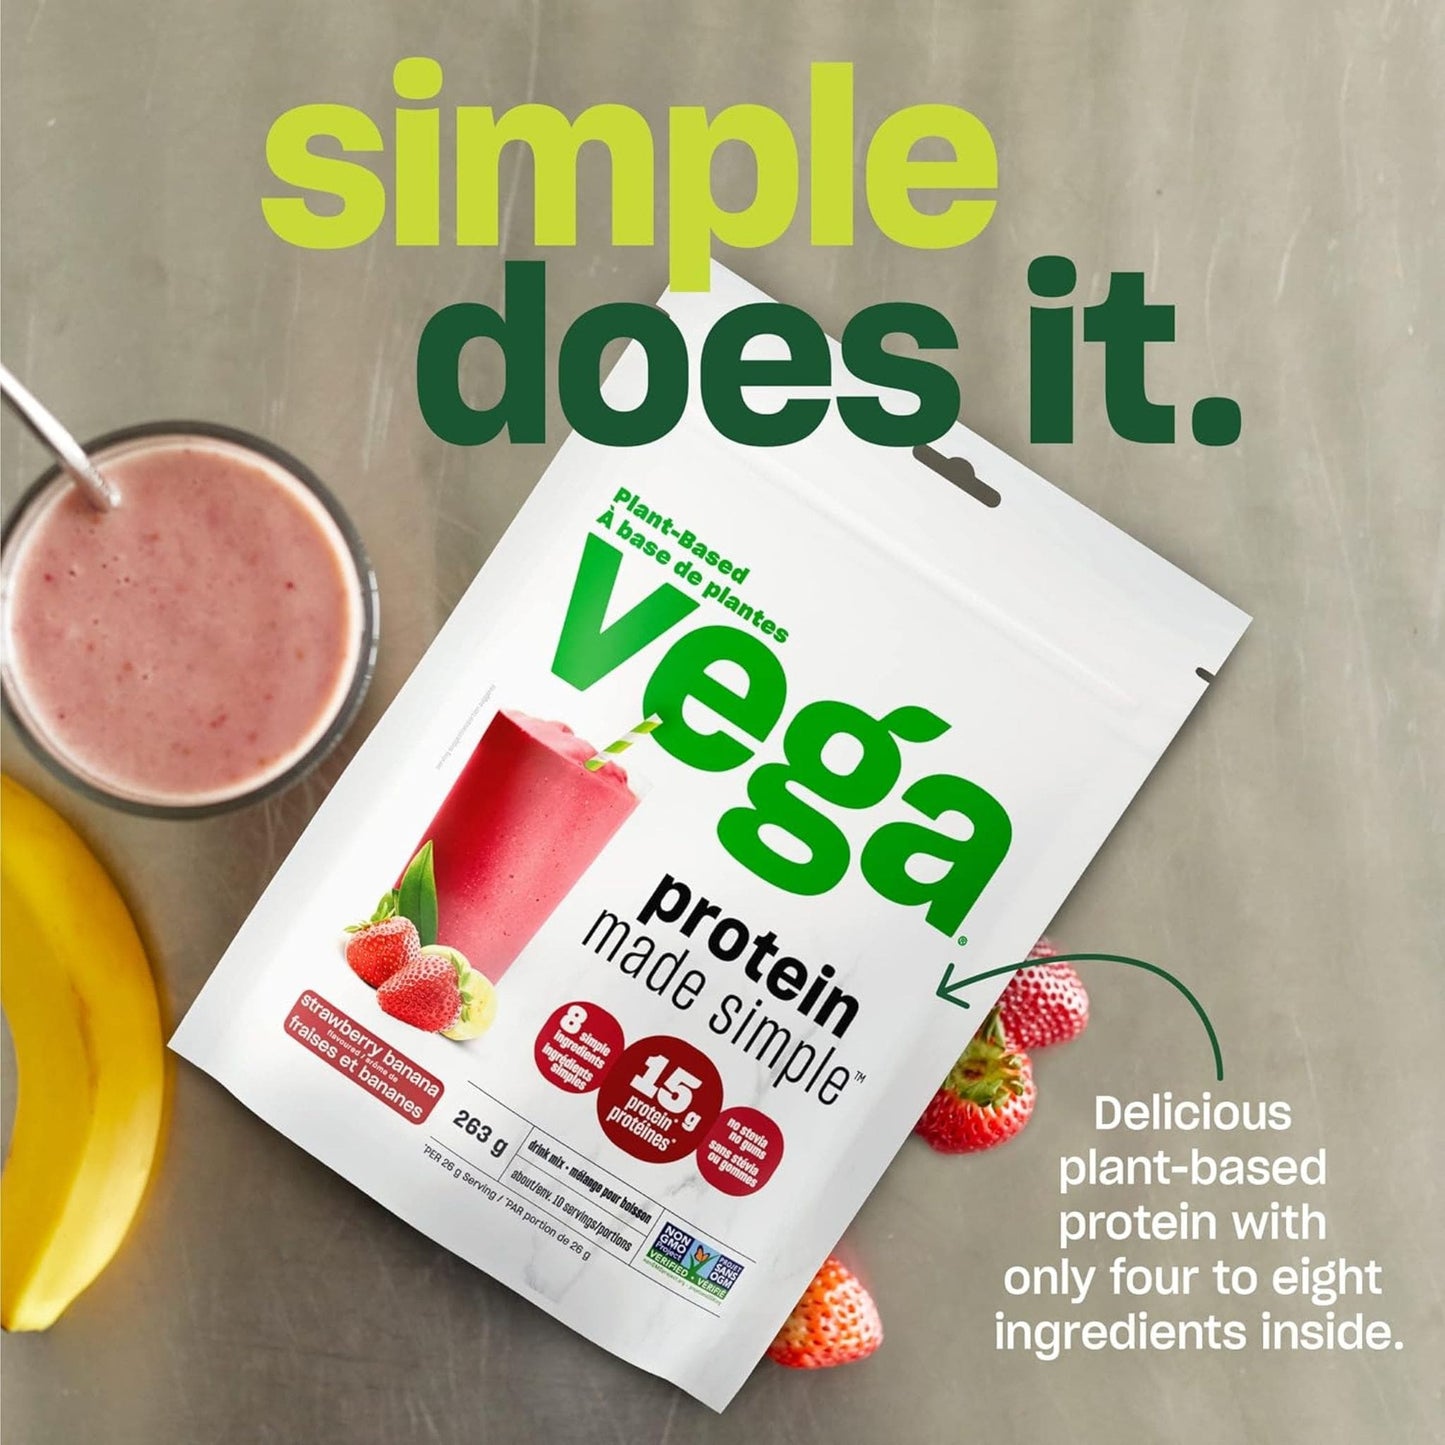 Strawberry Banana | Vega Protein Made Simple // Strawberry Banana Flavour